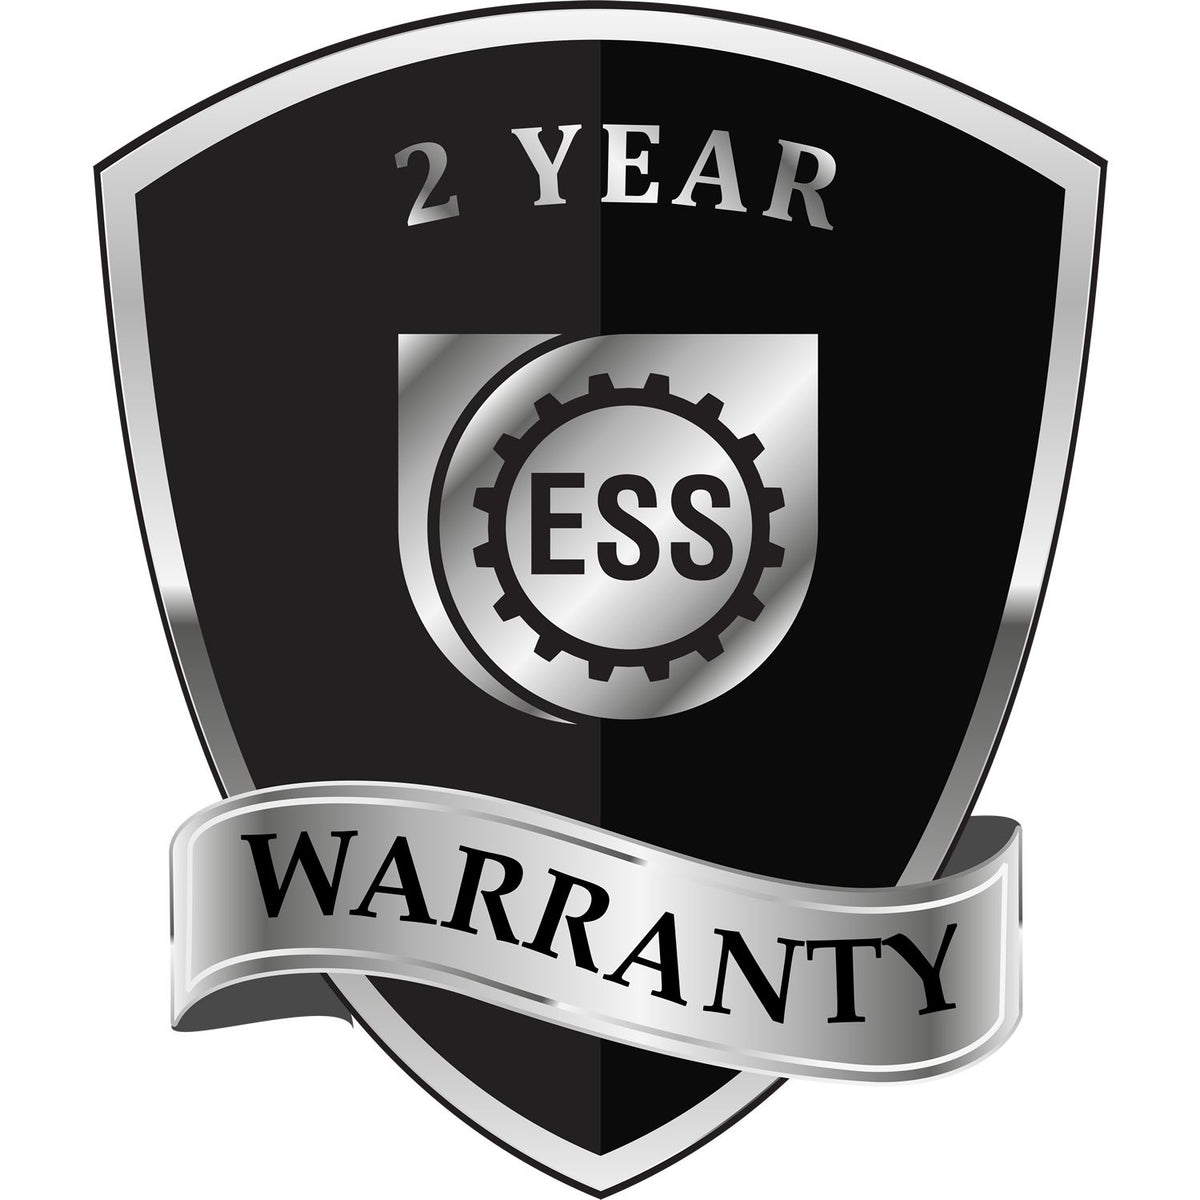 A black and silver badge or emblem showing warranty information for the Hybrid Mississippi Geologist Seal